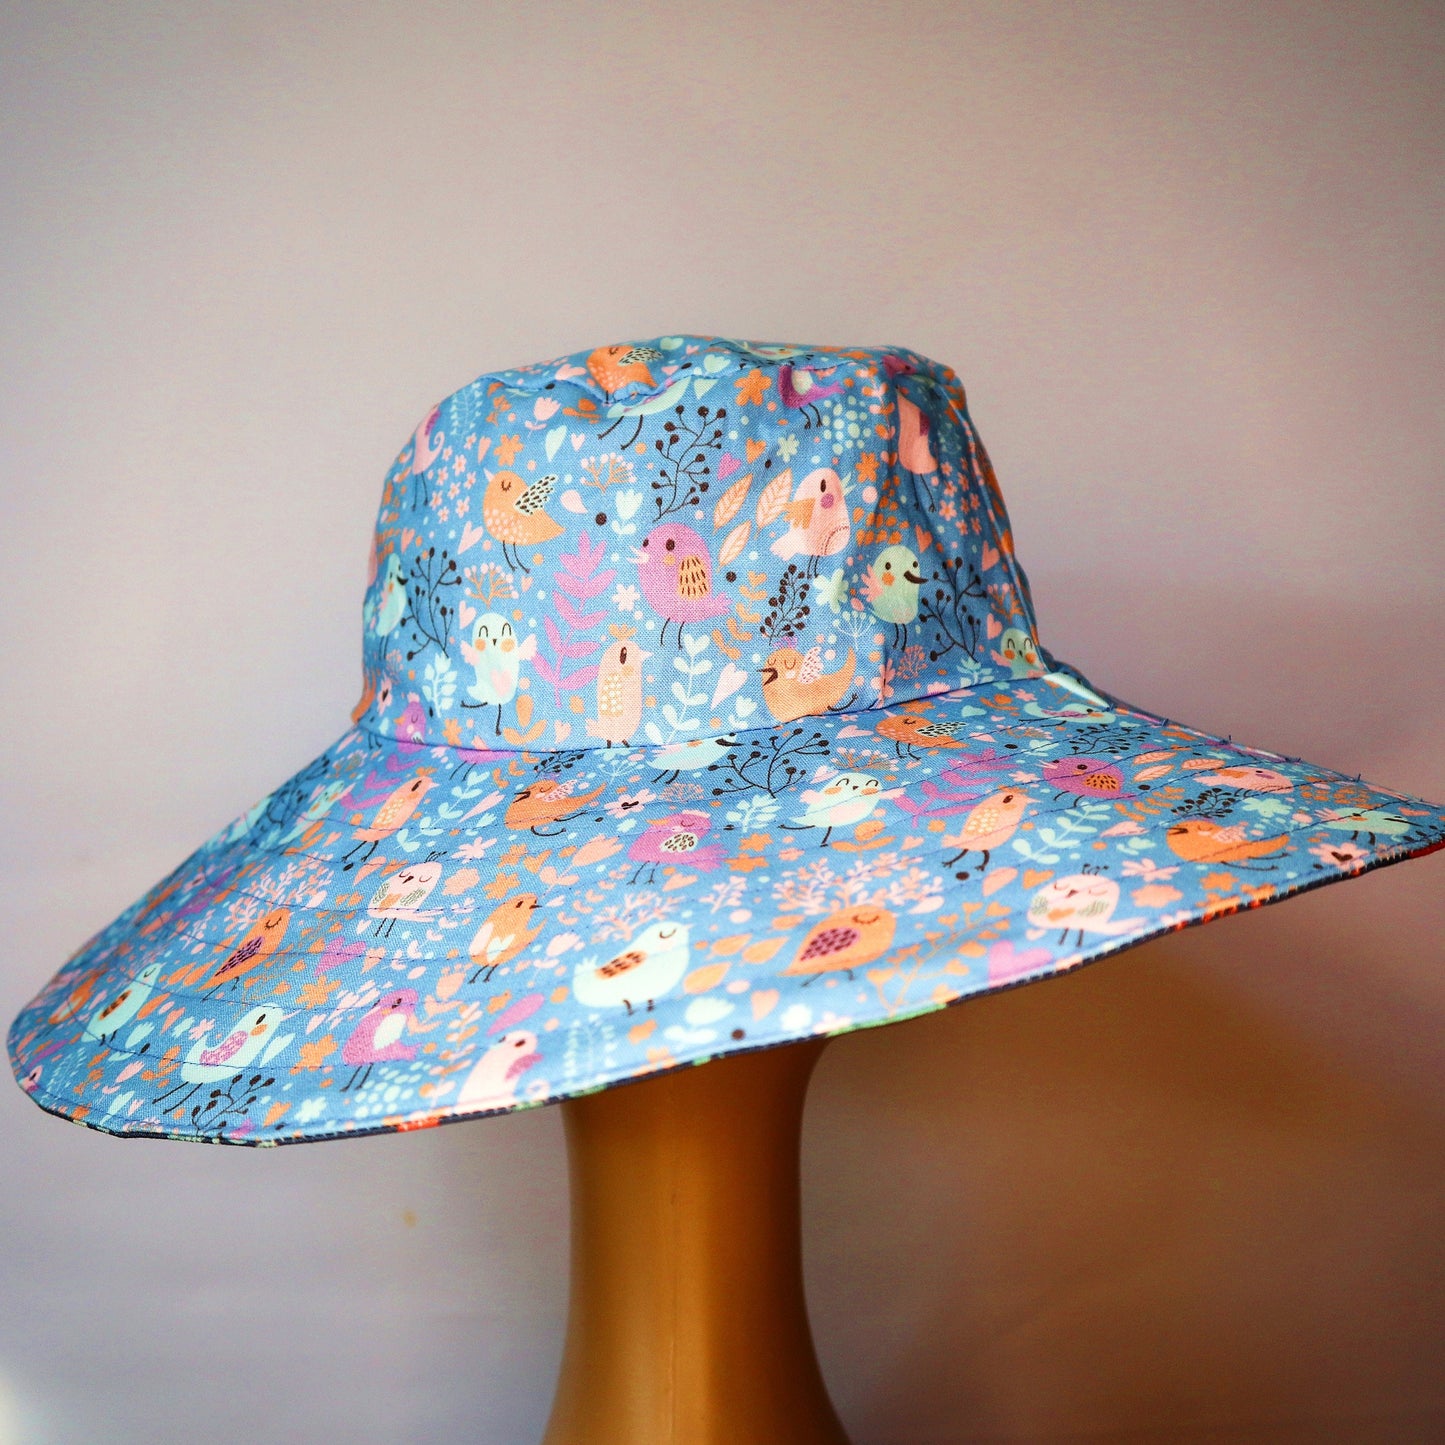 Wide Brim Reversible Sun Hat, Ladies / Girls sizes avail - blue floral